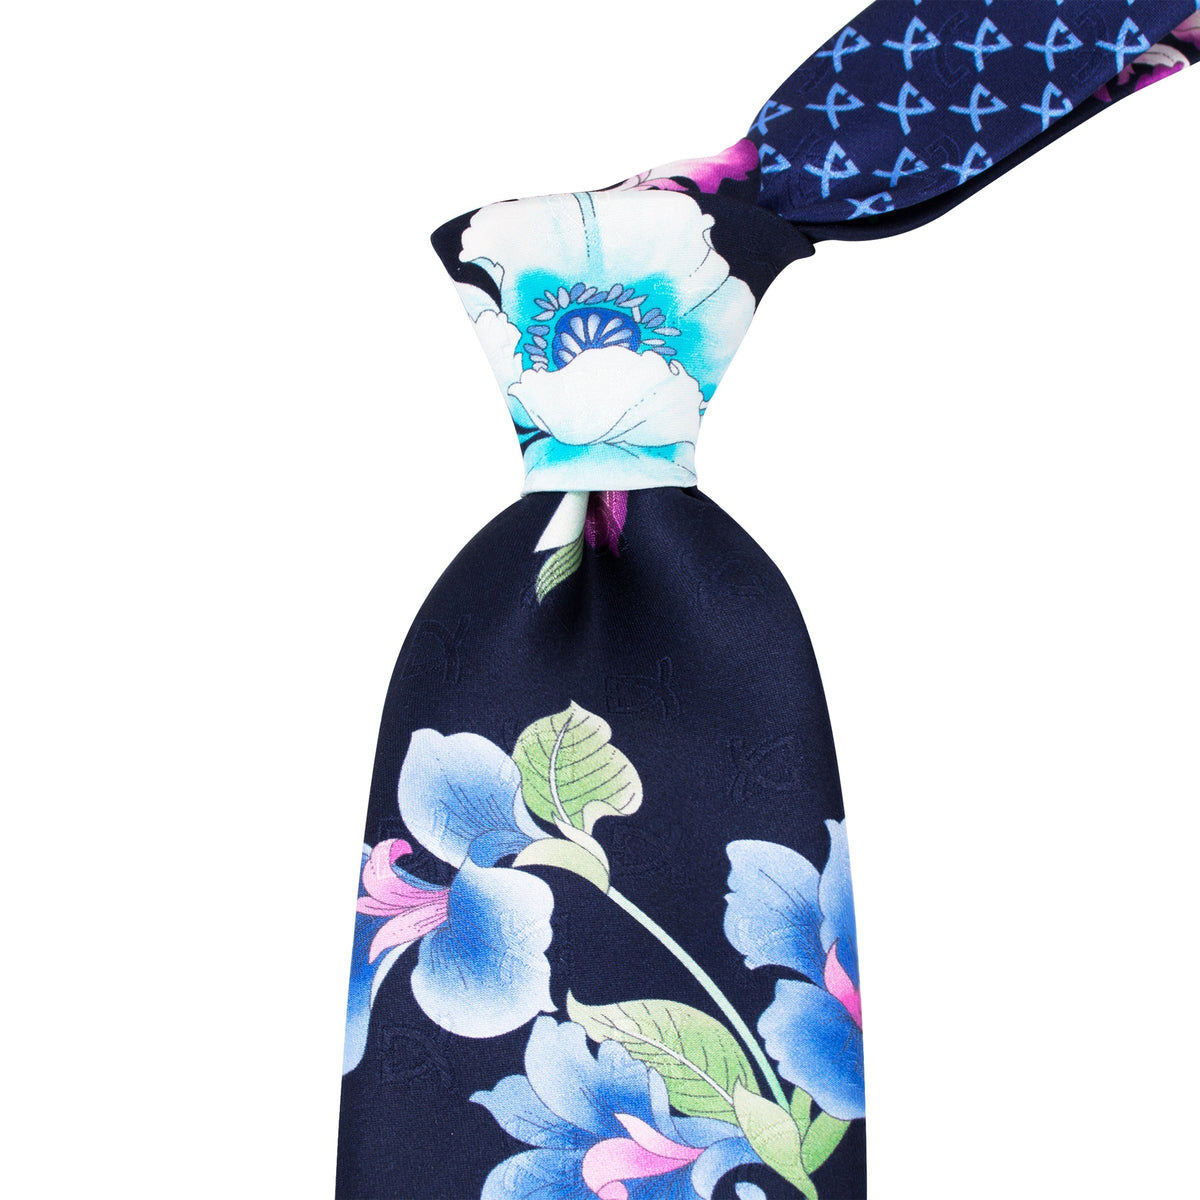 Leonard Navy Silk Satin 8cm Tie with Floral Prints-Cufflinks.com.sg | Neckties.com.sg